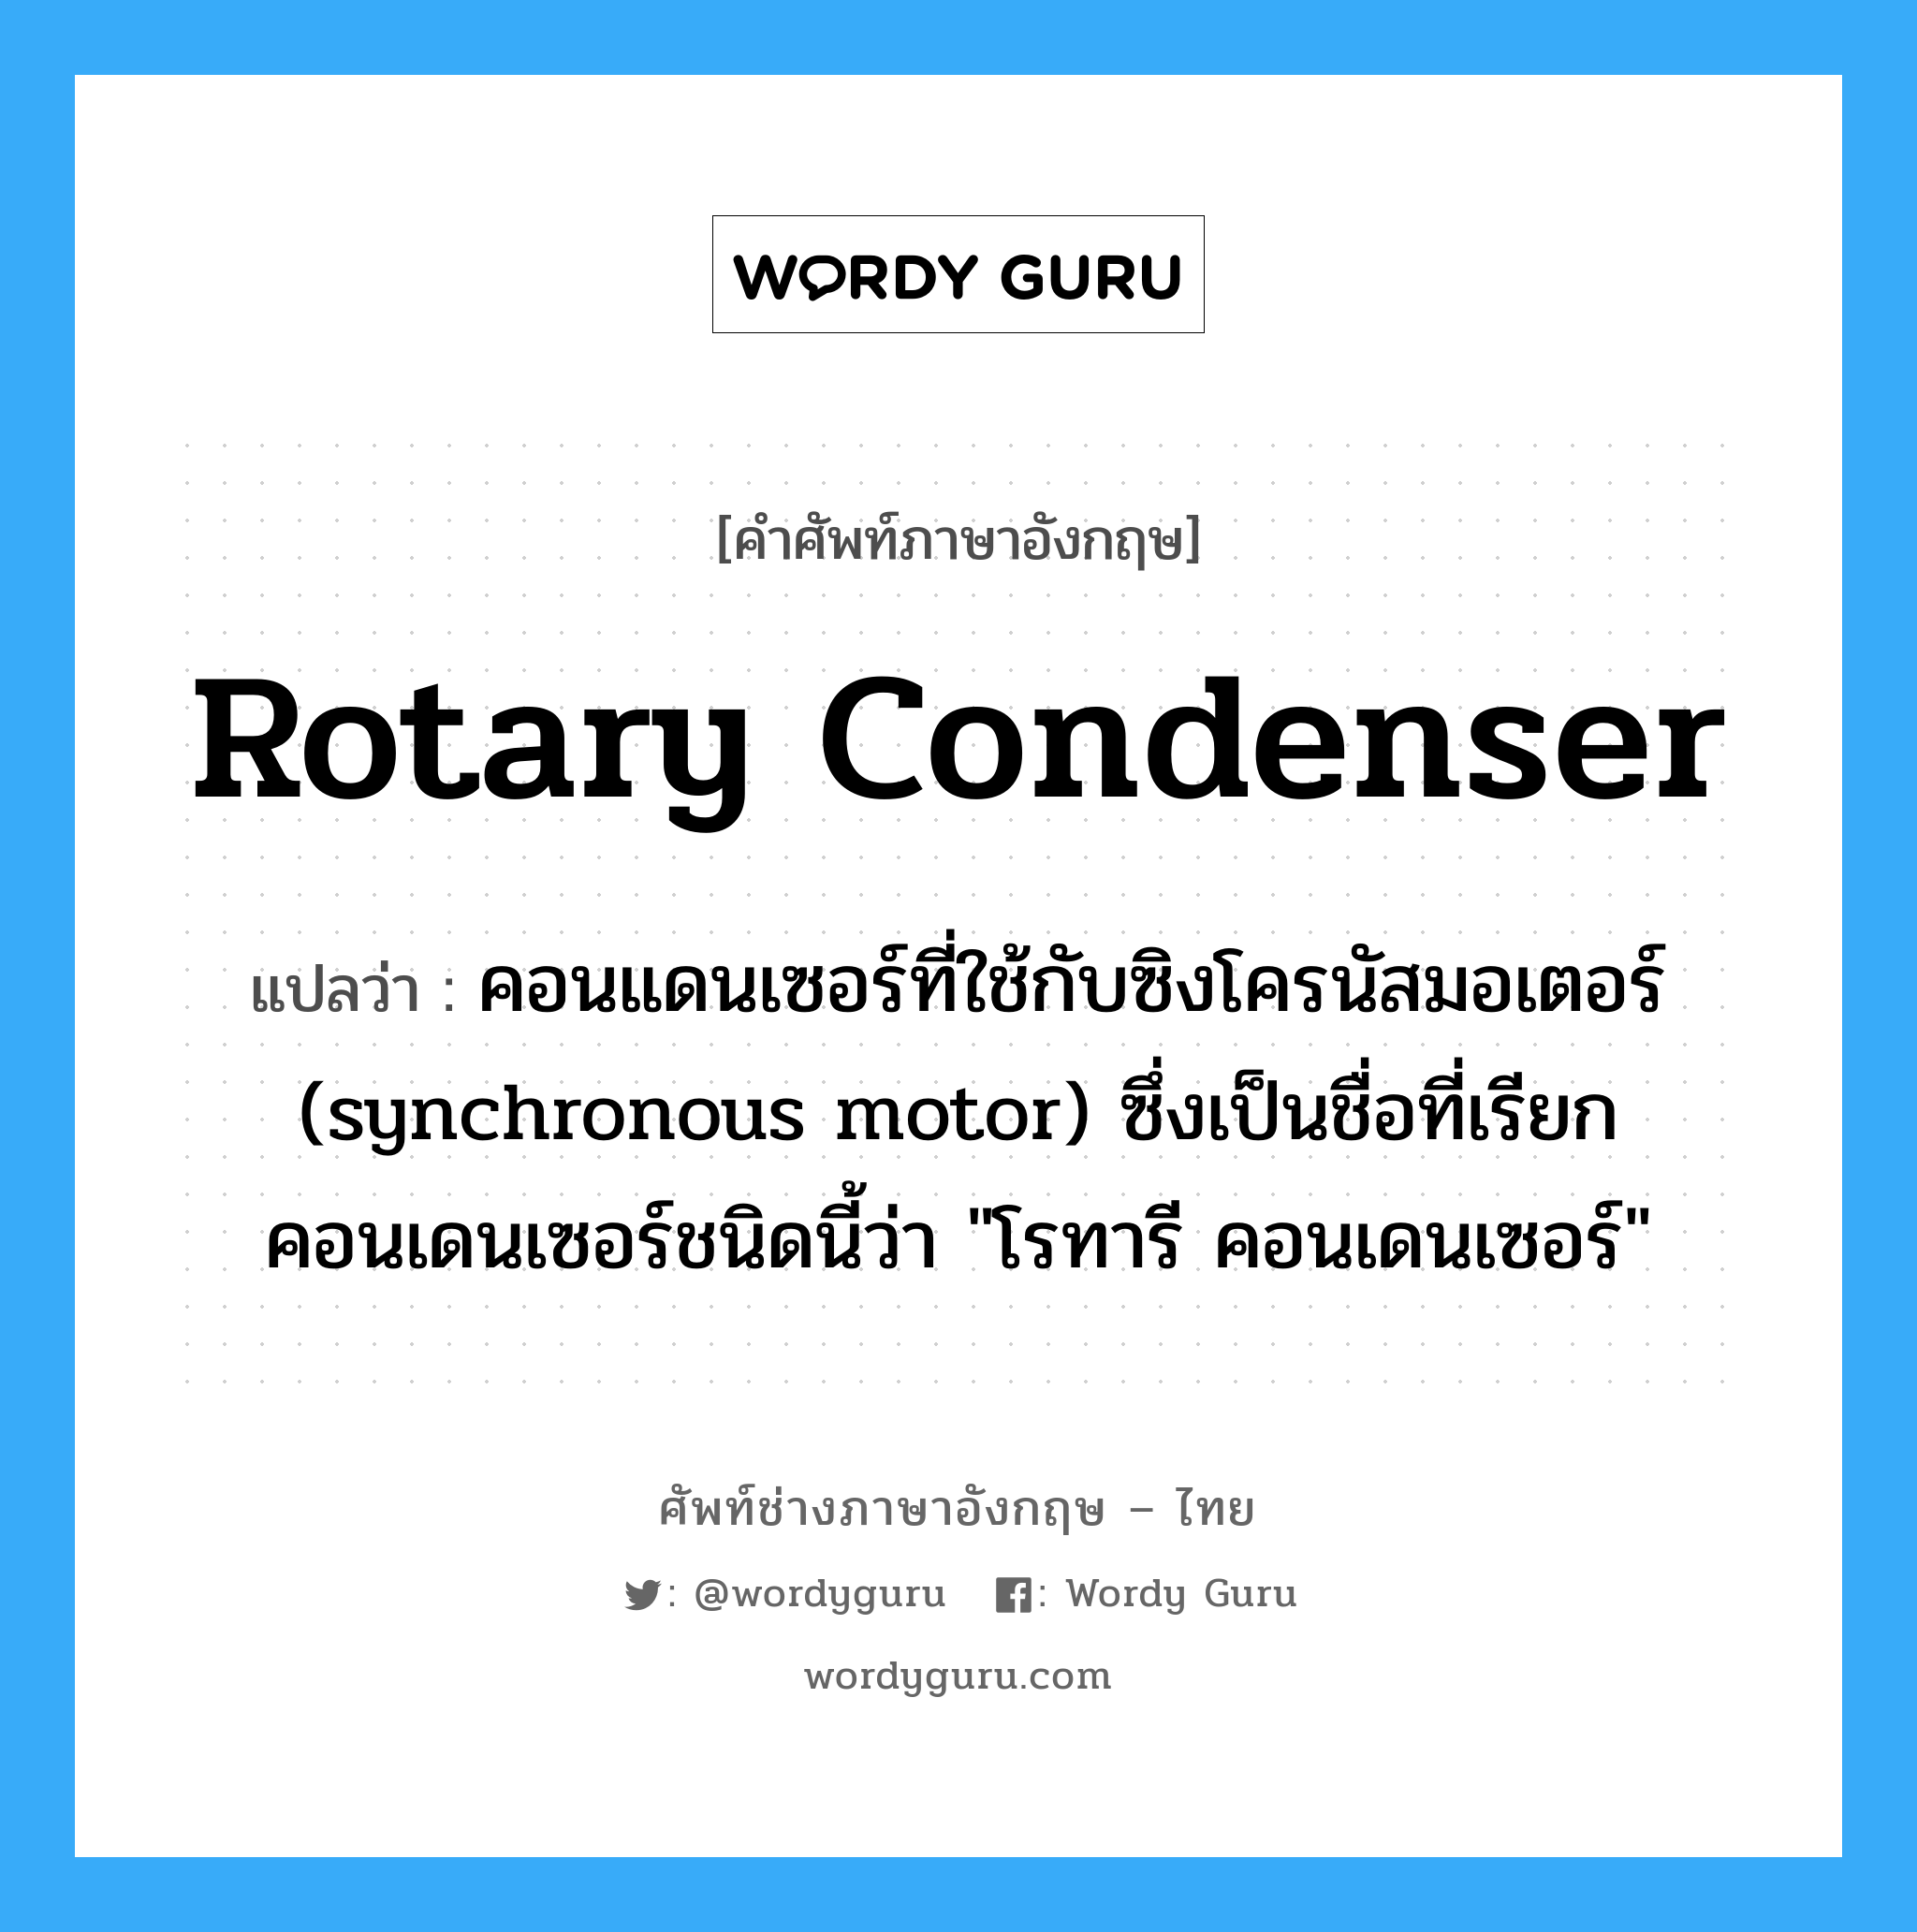 rotary condenser แปลว่า?, คำศัพท์ช่างภาษาอังกฤษ - ไทย rotary condenser คำศัพท์ภาษาอังกฤษ rotary condenser แปลว่า คอนแดนเซอร์ที่ใช้กับซิงโครนัสมอเตอร์ (synchronous motor) ซึ่งเป็นชื่อที่เรียกคอนเดนเซอร์ชนิดนี้ว่า "โรทารี คอนเดนเซอร์"